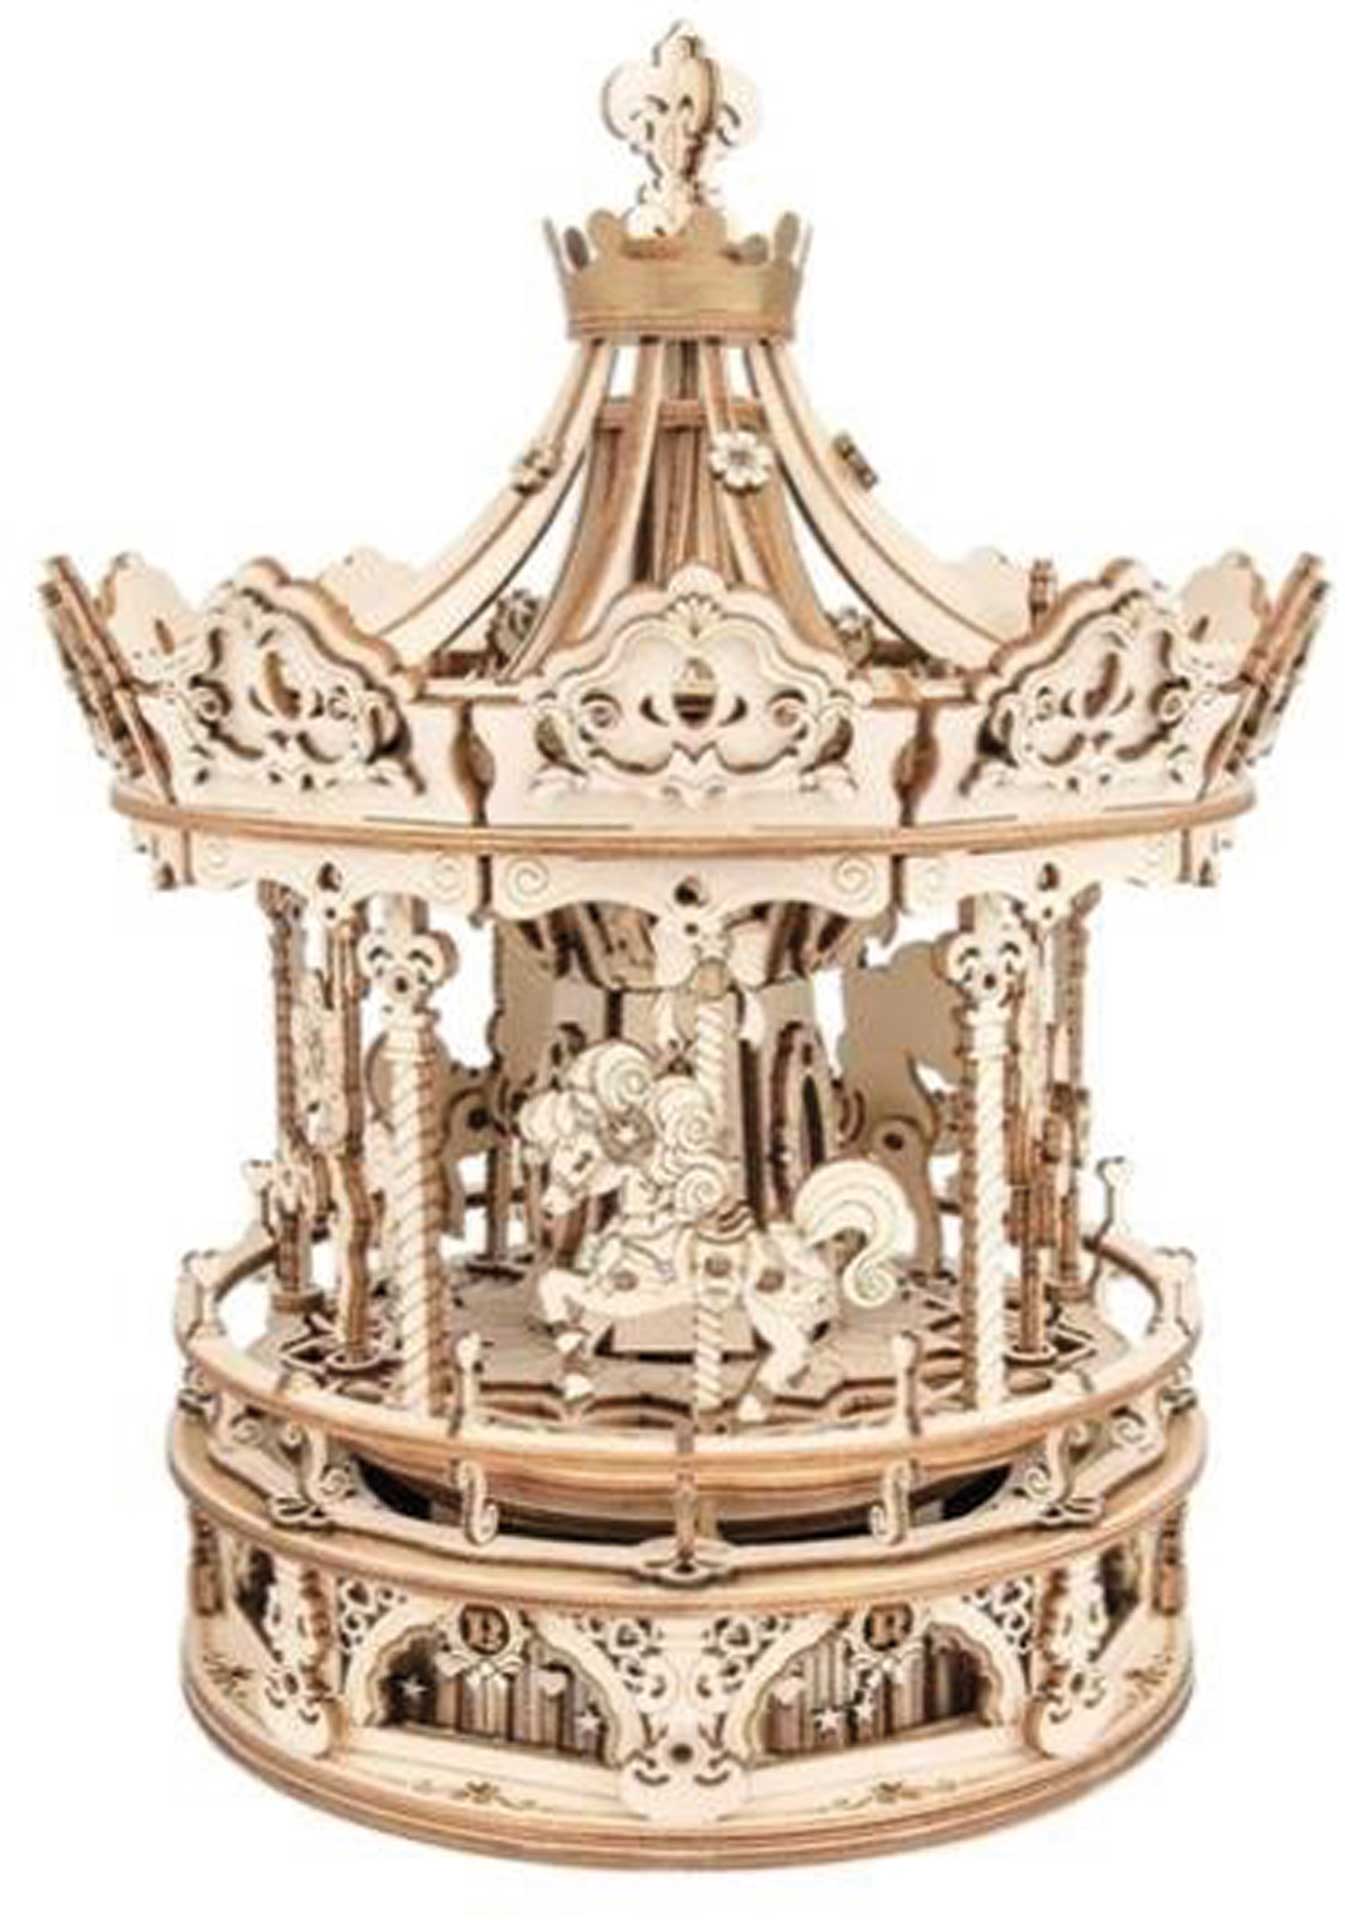 Pichler Romantic Carousel (Lasercut Holzbausatz)